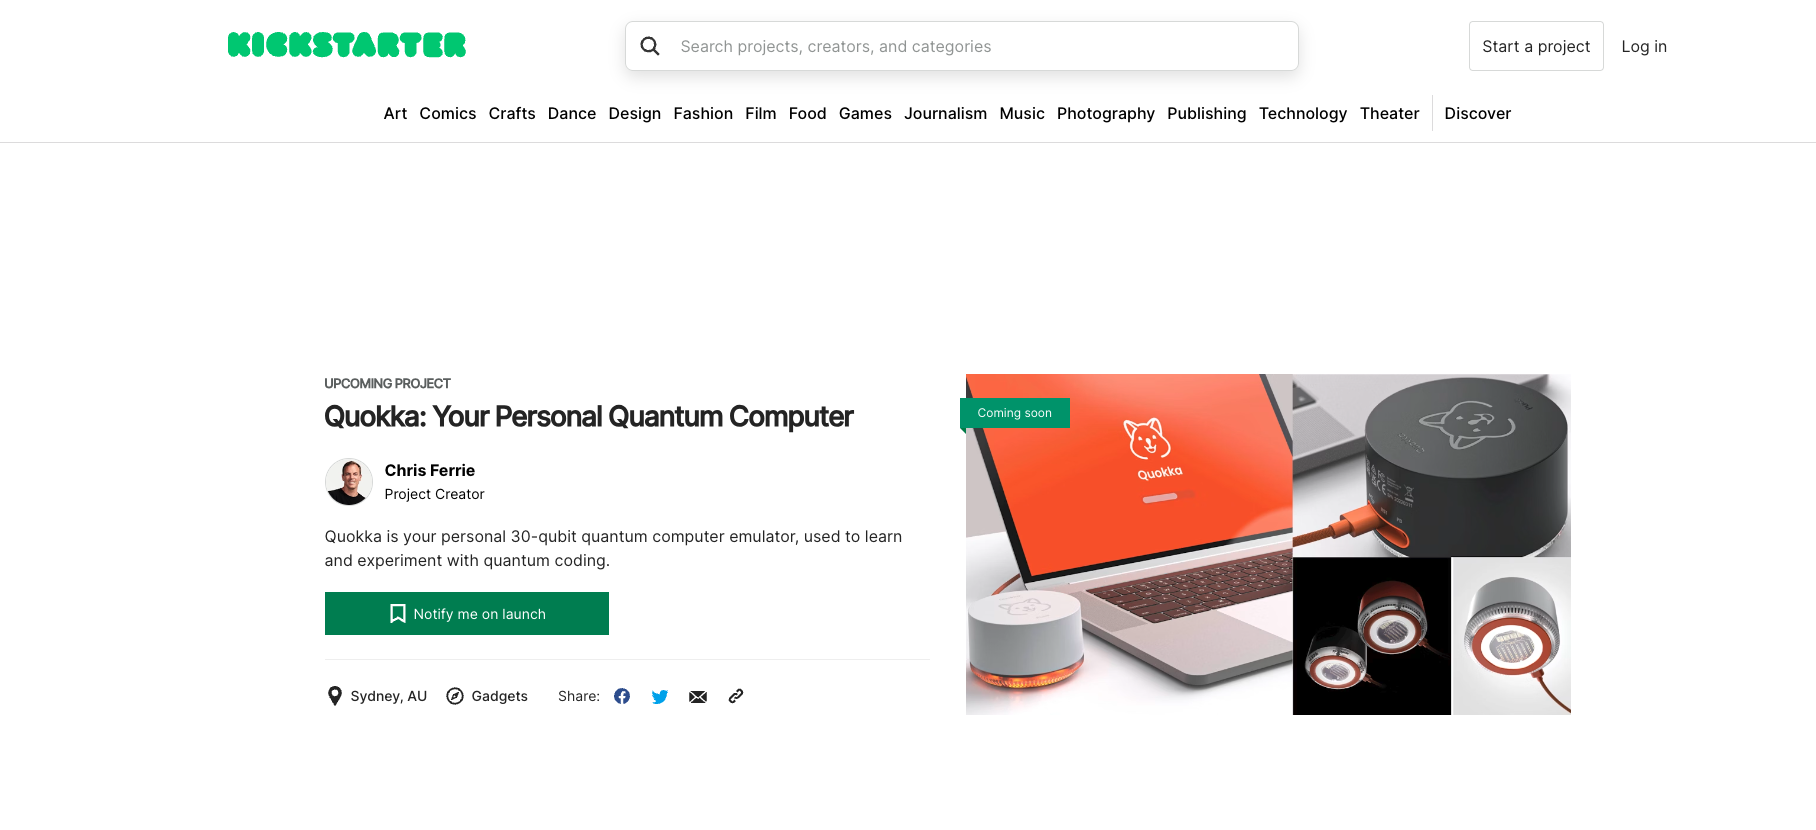 Chris Ferrie Unveils Quokka: A 30-Qubit Quantum Computer Emulator For Consumer Education Soon On Kickstarter.